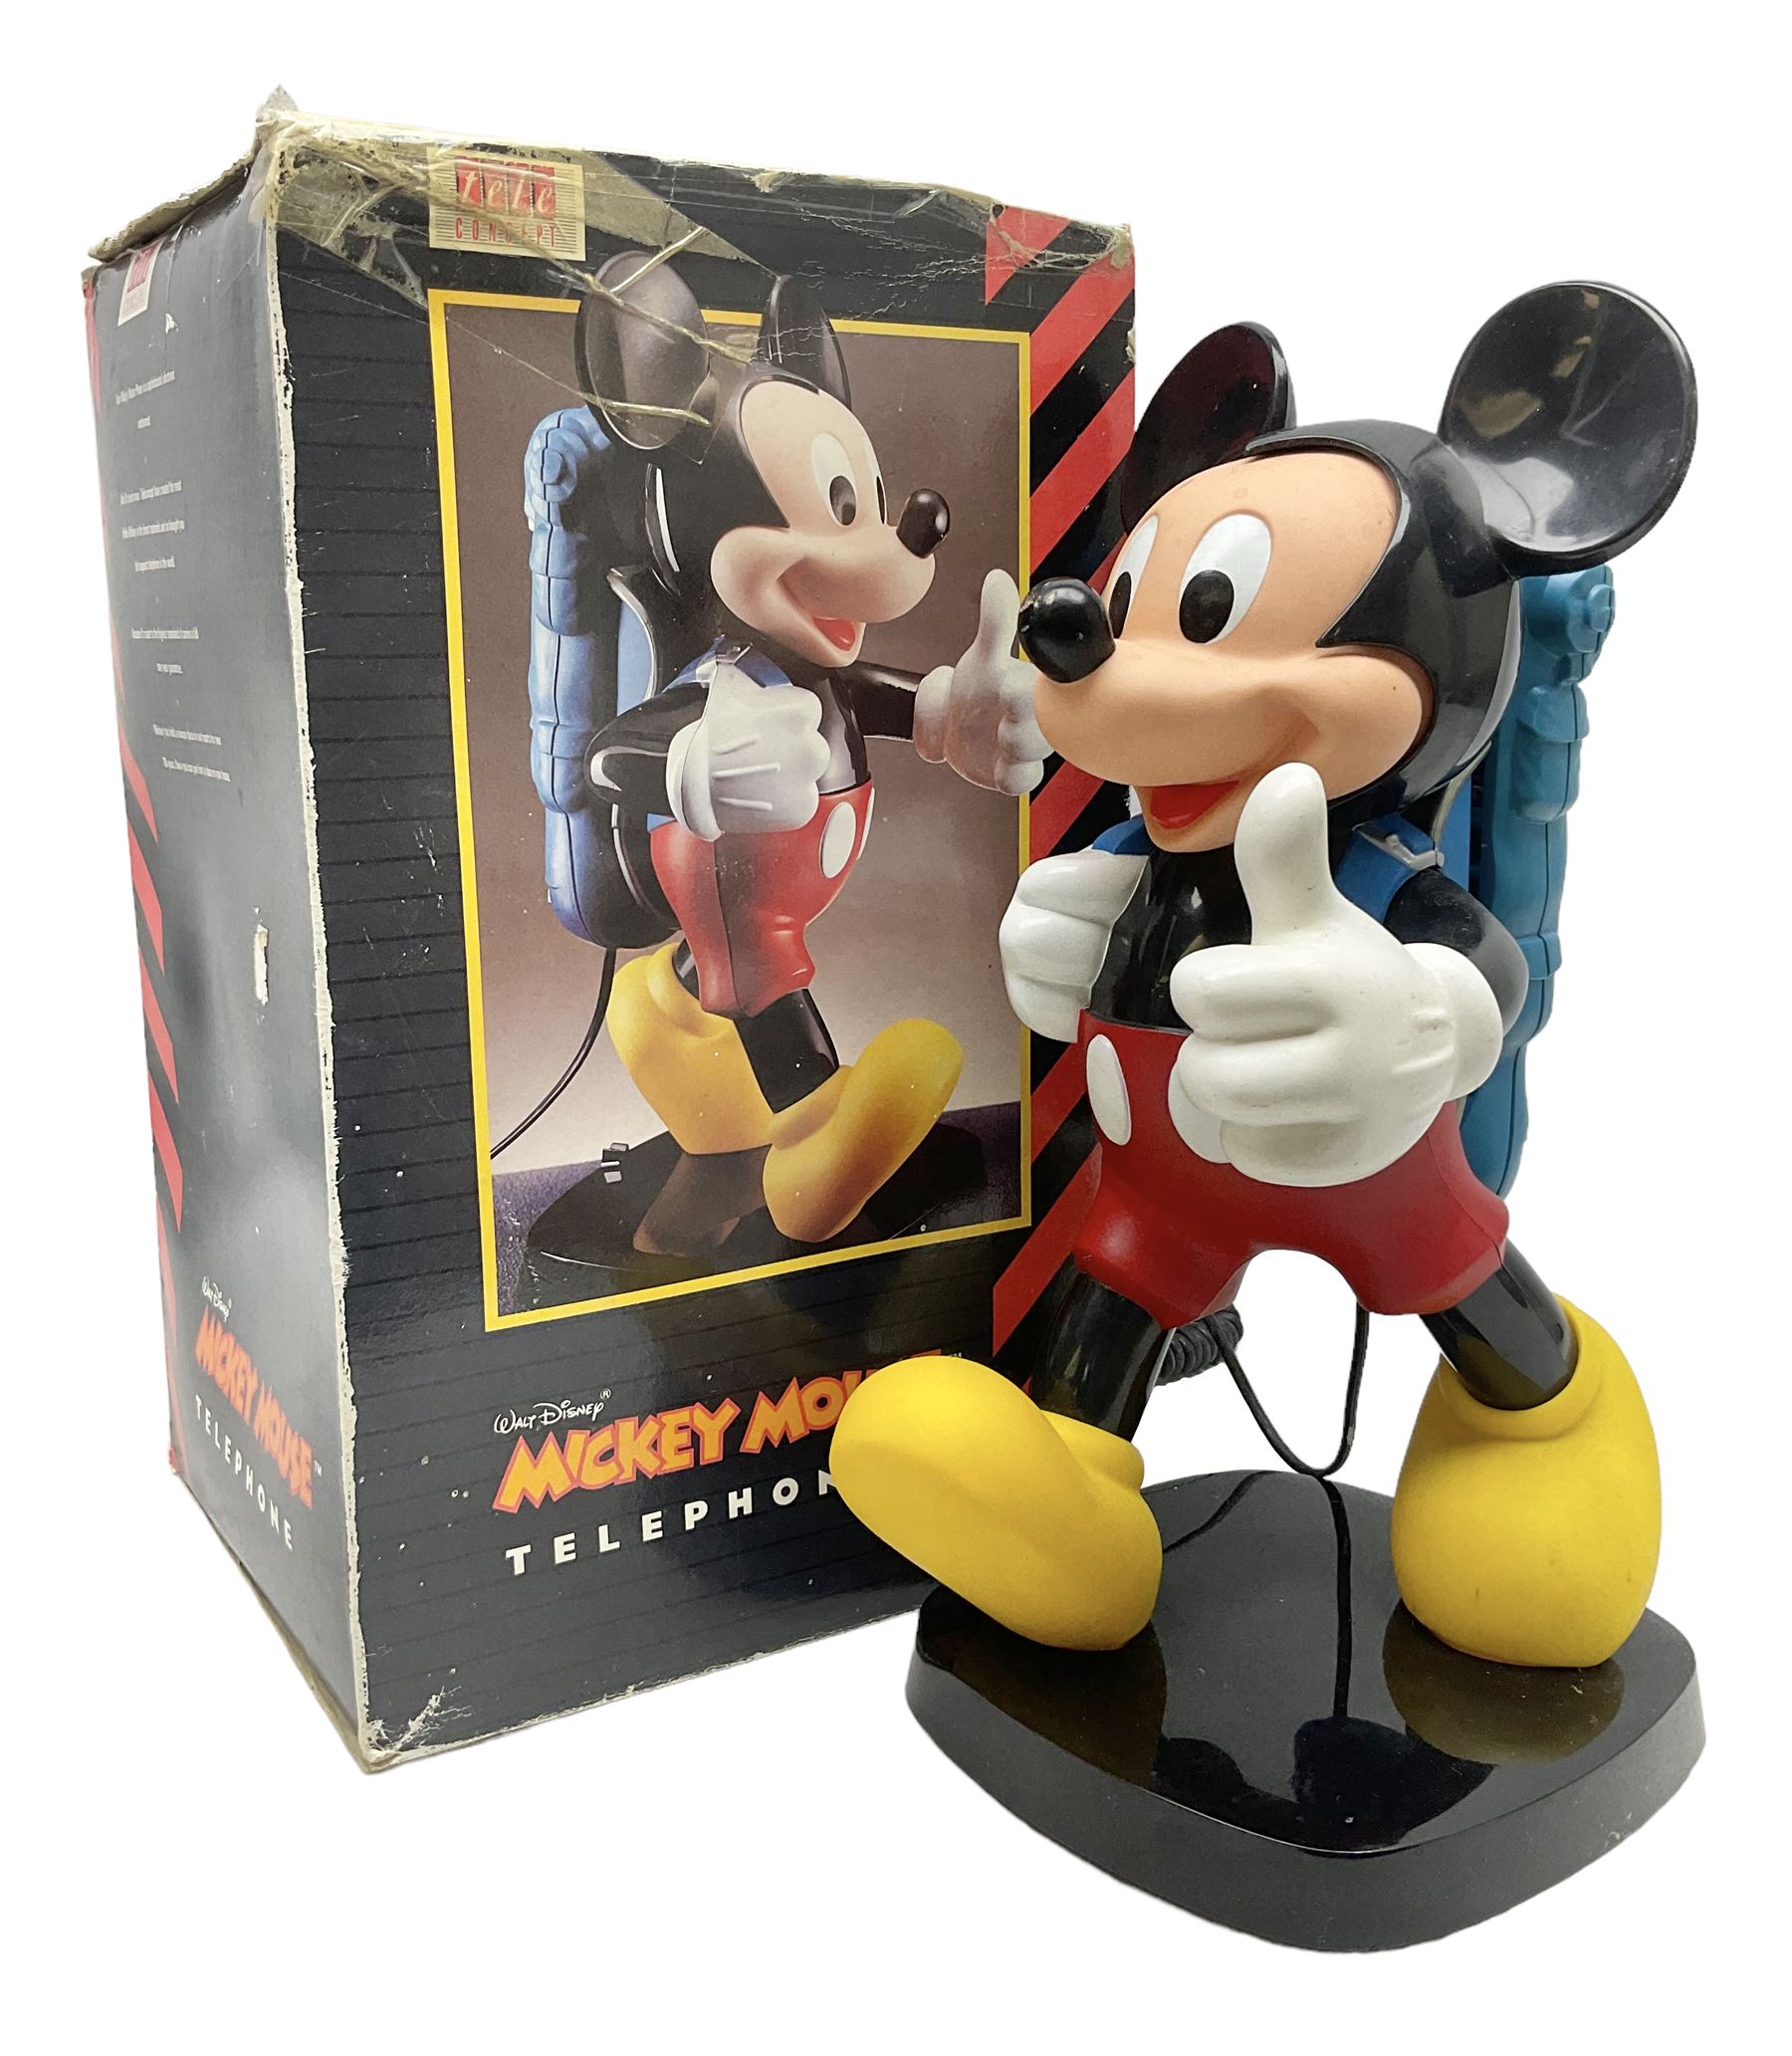 Novelty Mickey Mouse telephone